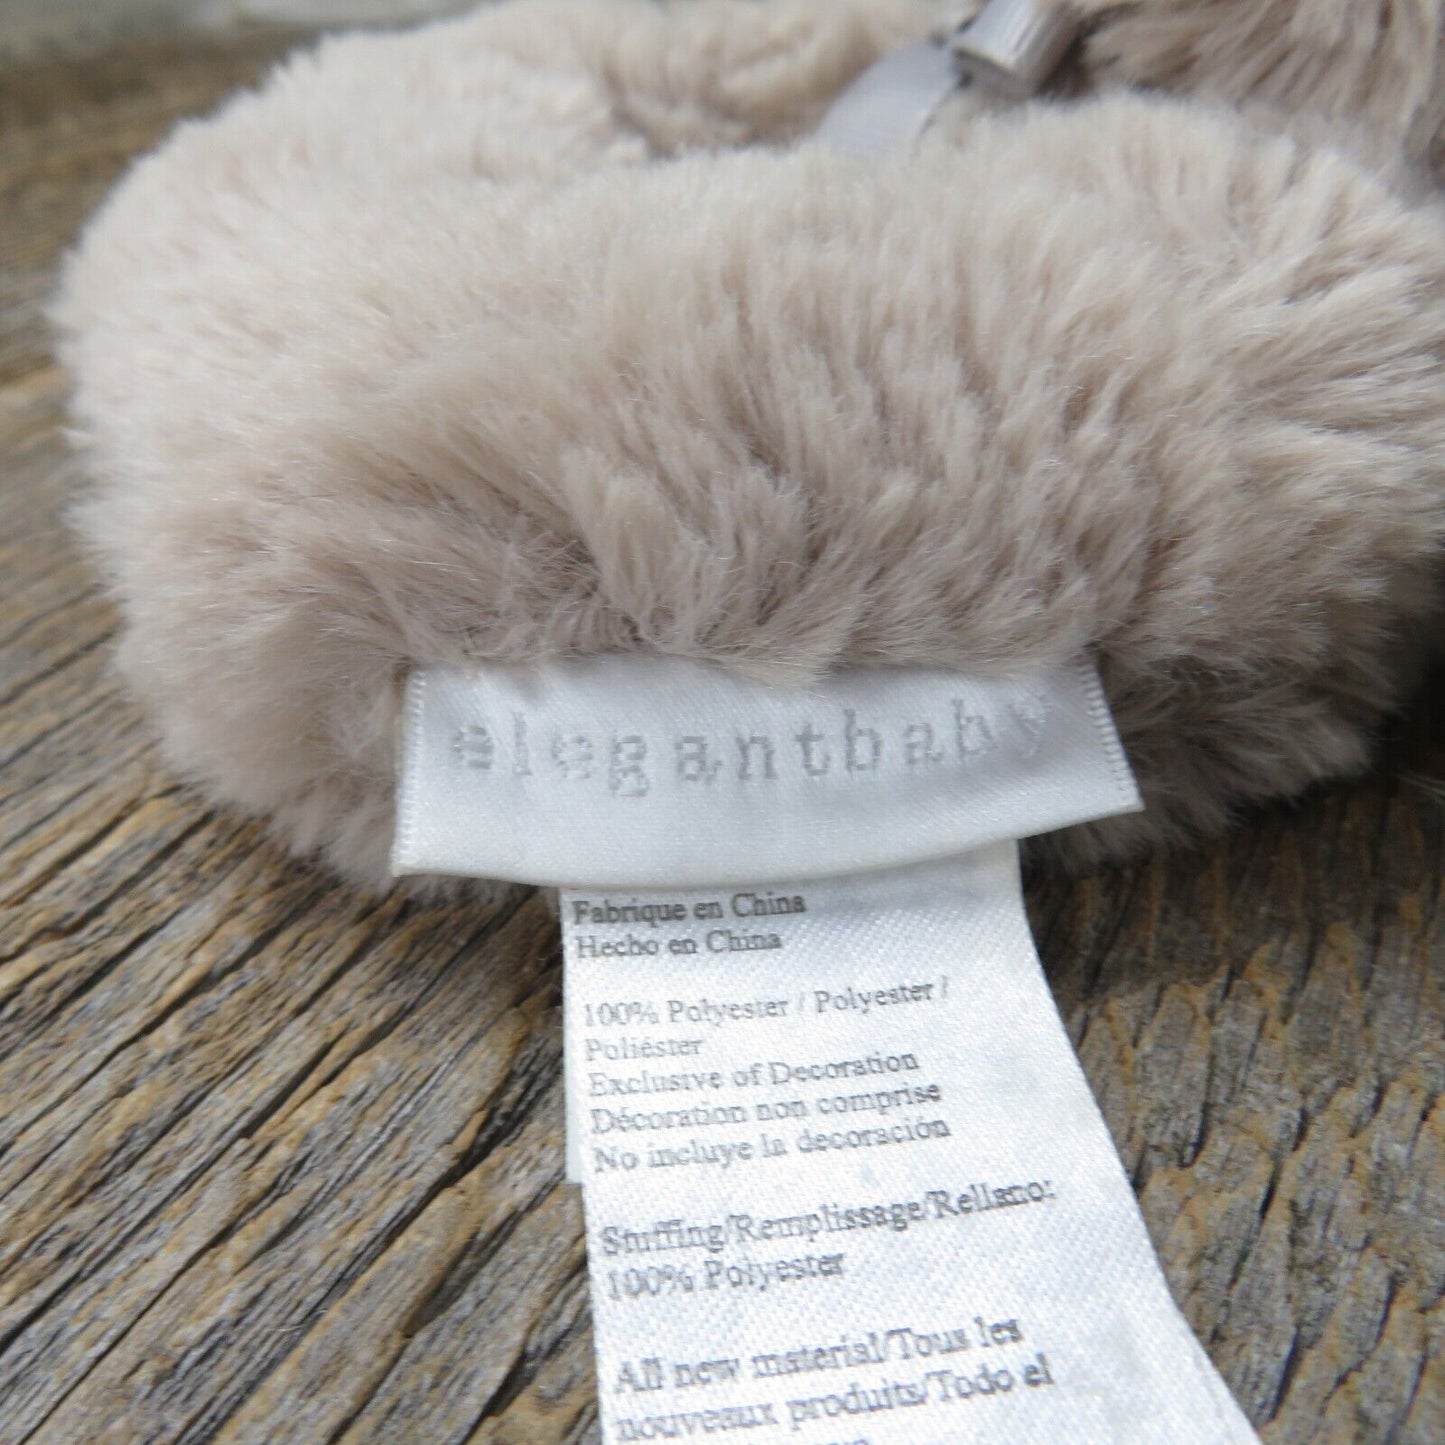 Dog Plush Rattle Handheld Stuffed Animal Lovey Security Gray Elegant Baby